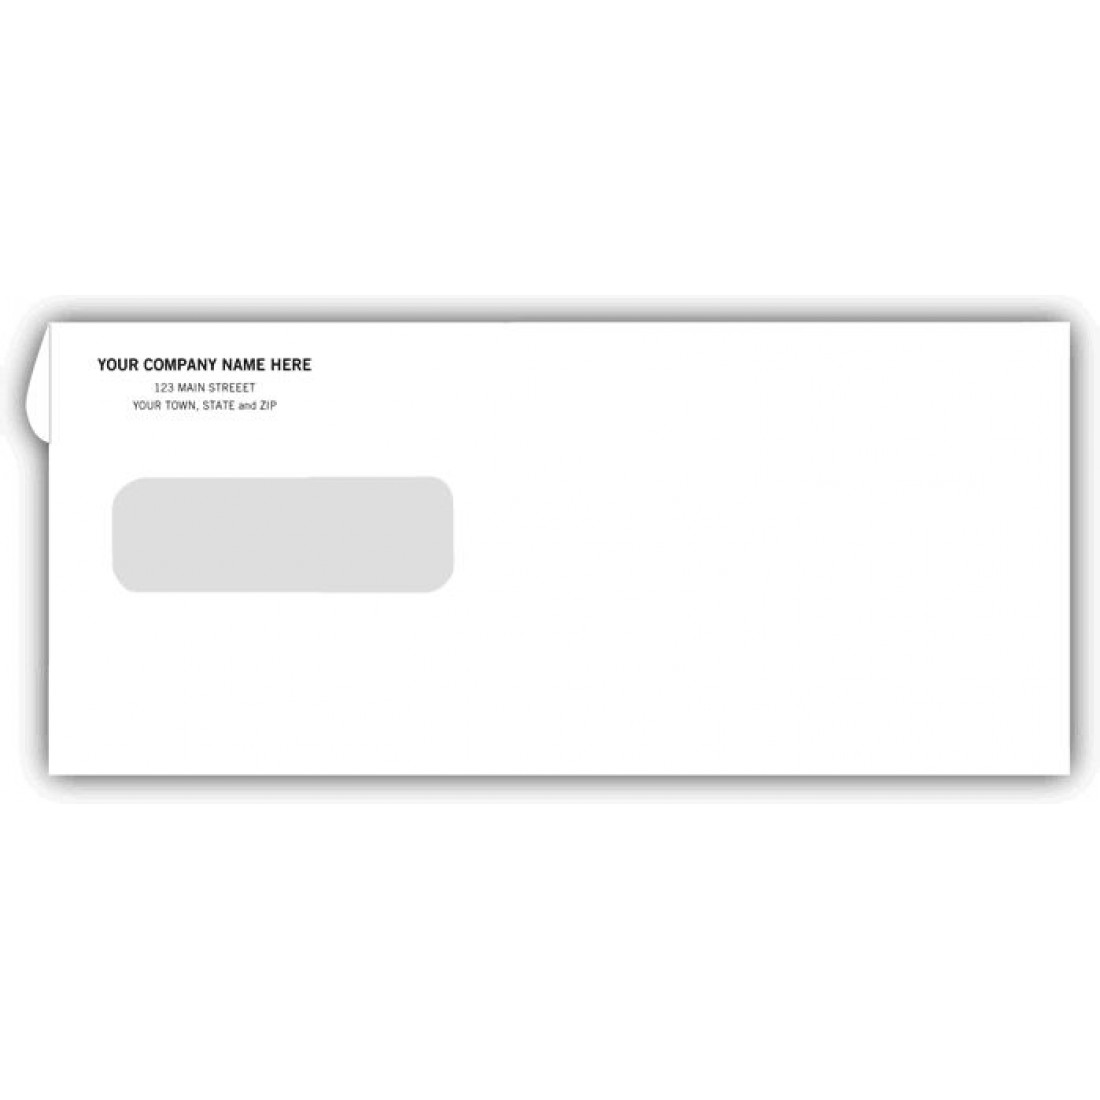 8 Single Window Printable Envelopes Free Shipping